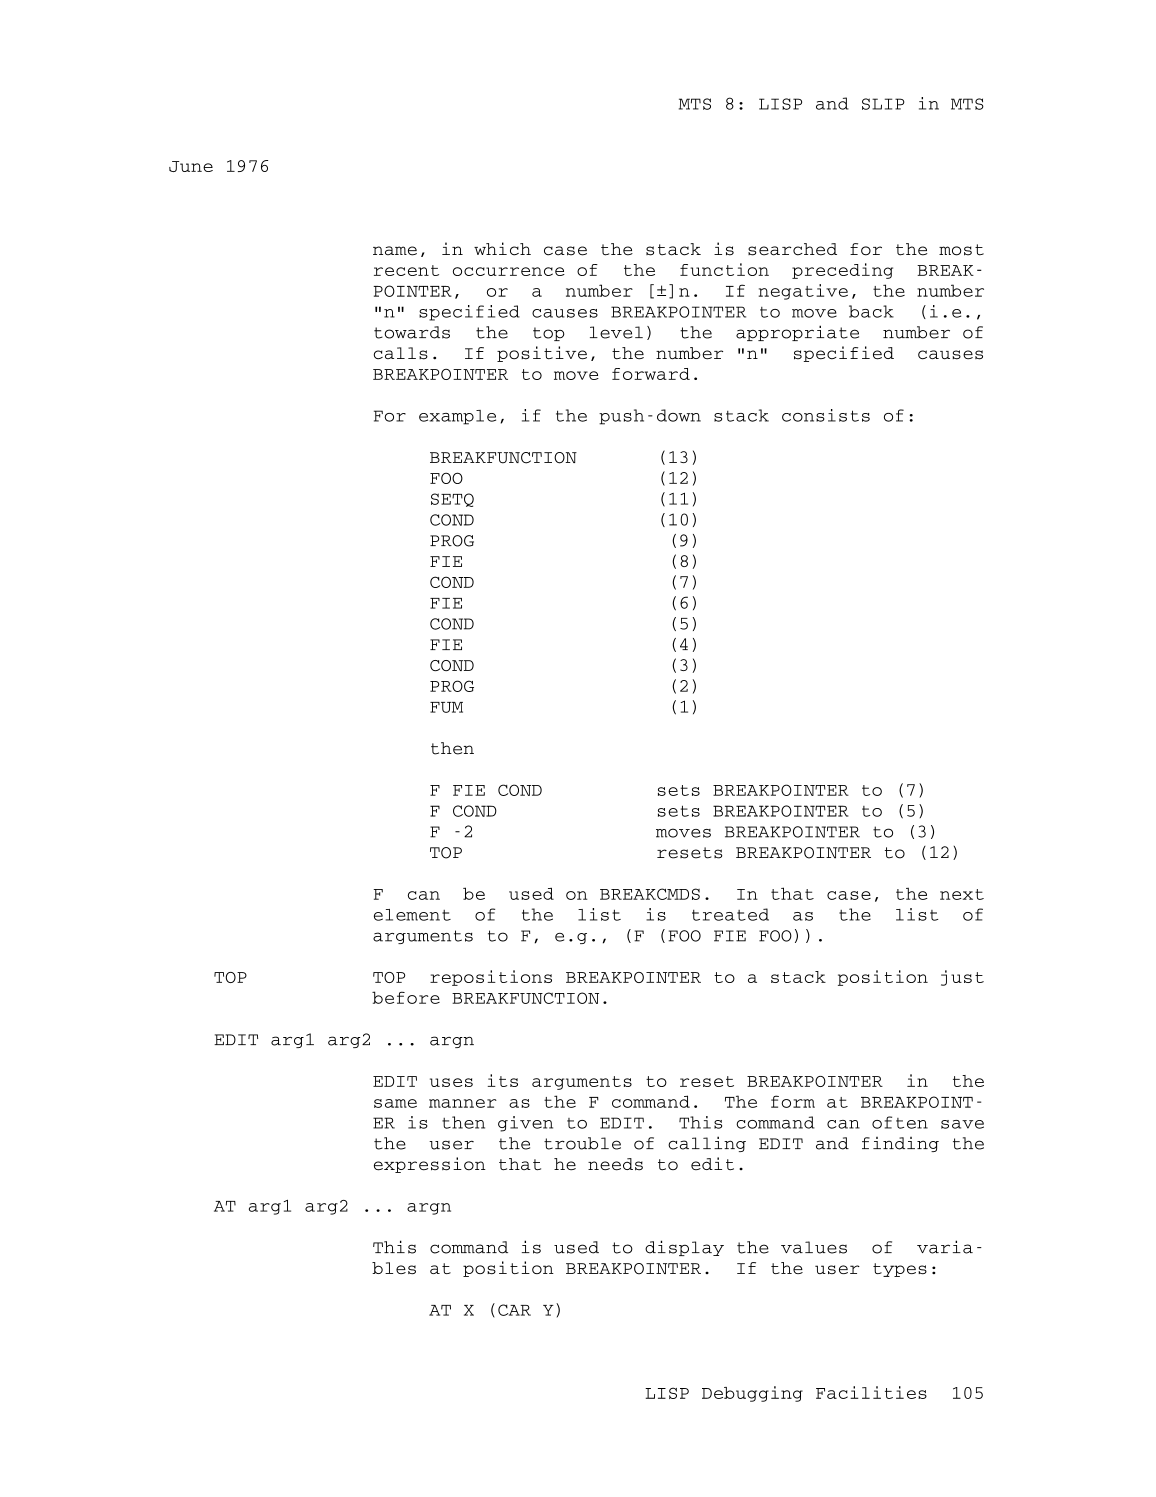 MTS Volume 8 - LISP and SLIP page 104